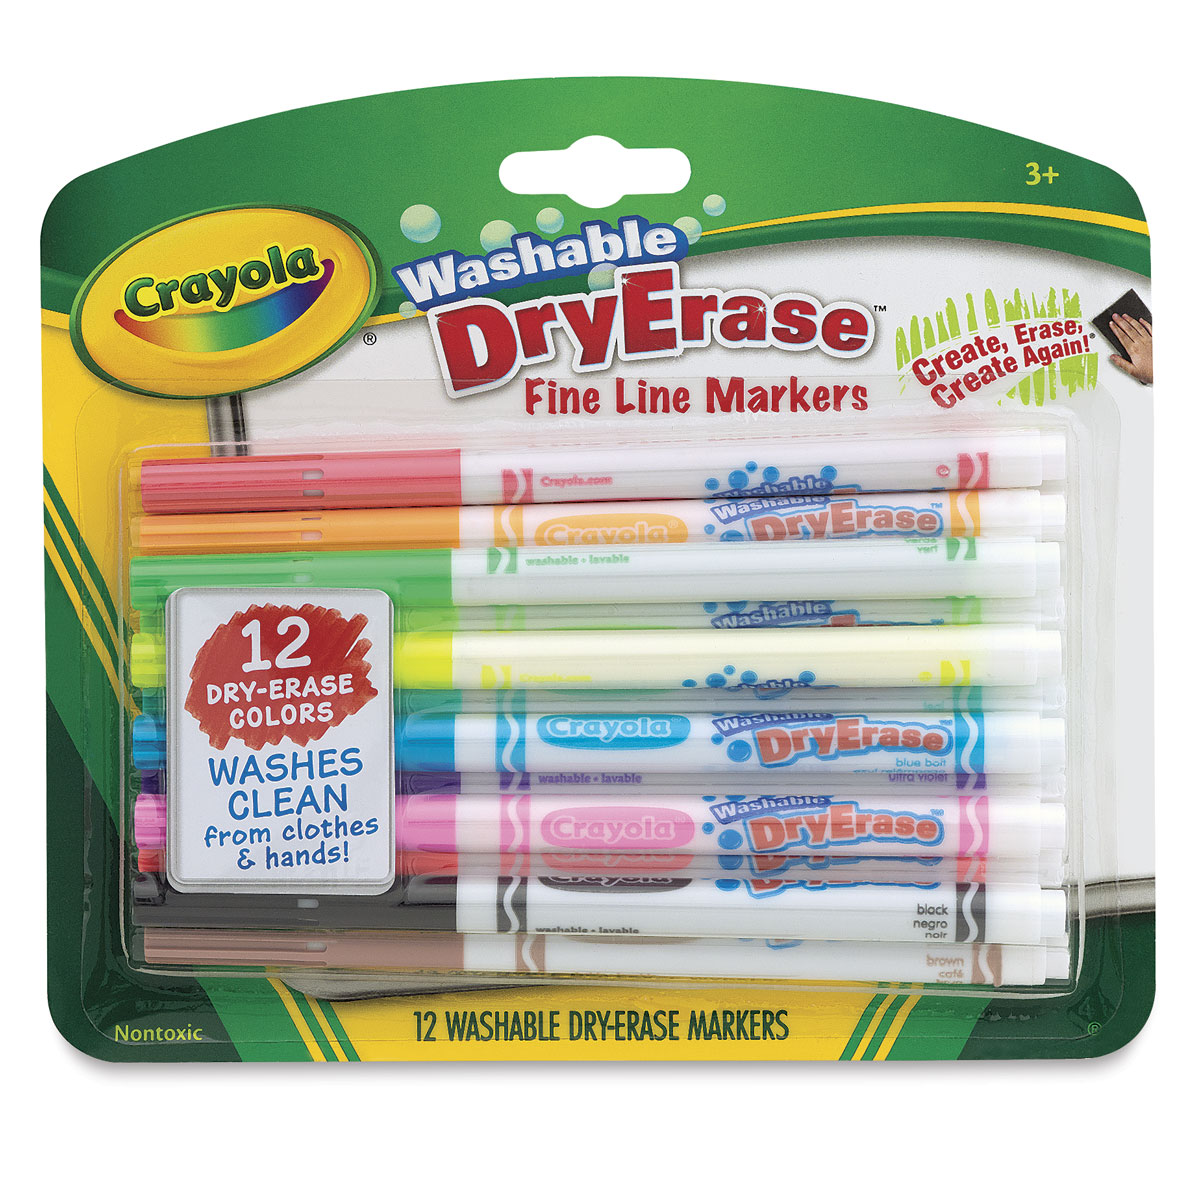 Crayola Washable Paint Sticks, 12 colors, (BIN54-6211)